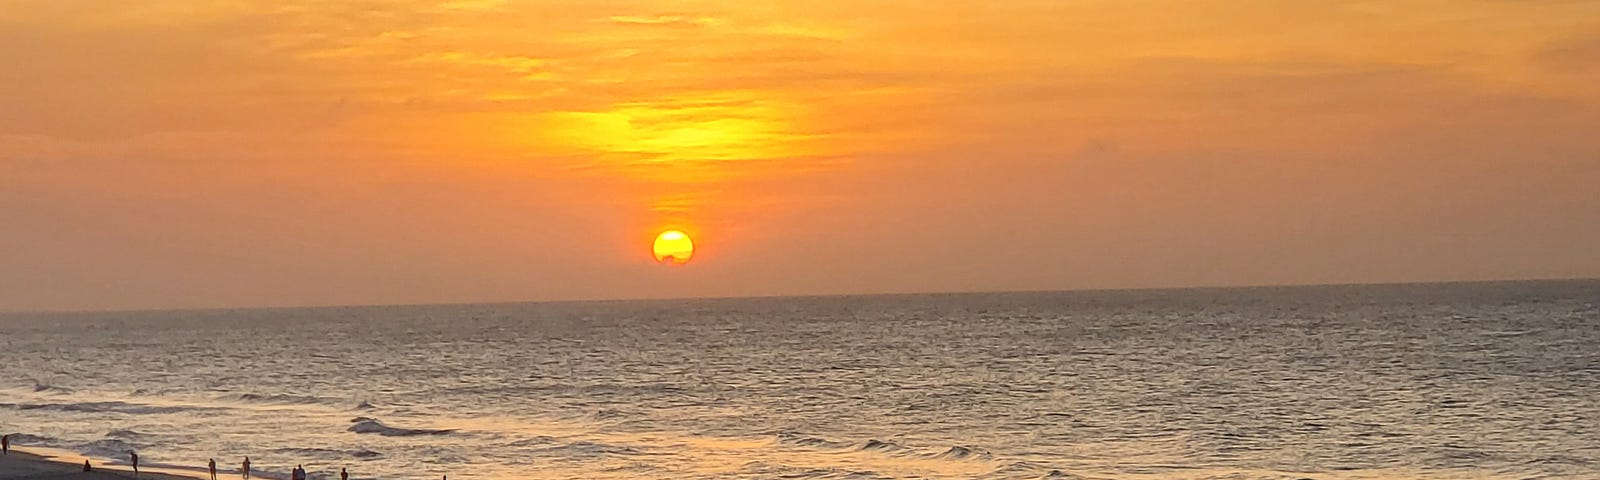 Sunrise of the Atlantic Ocean along the Myrtle Beach coast